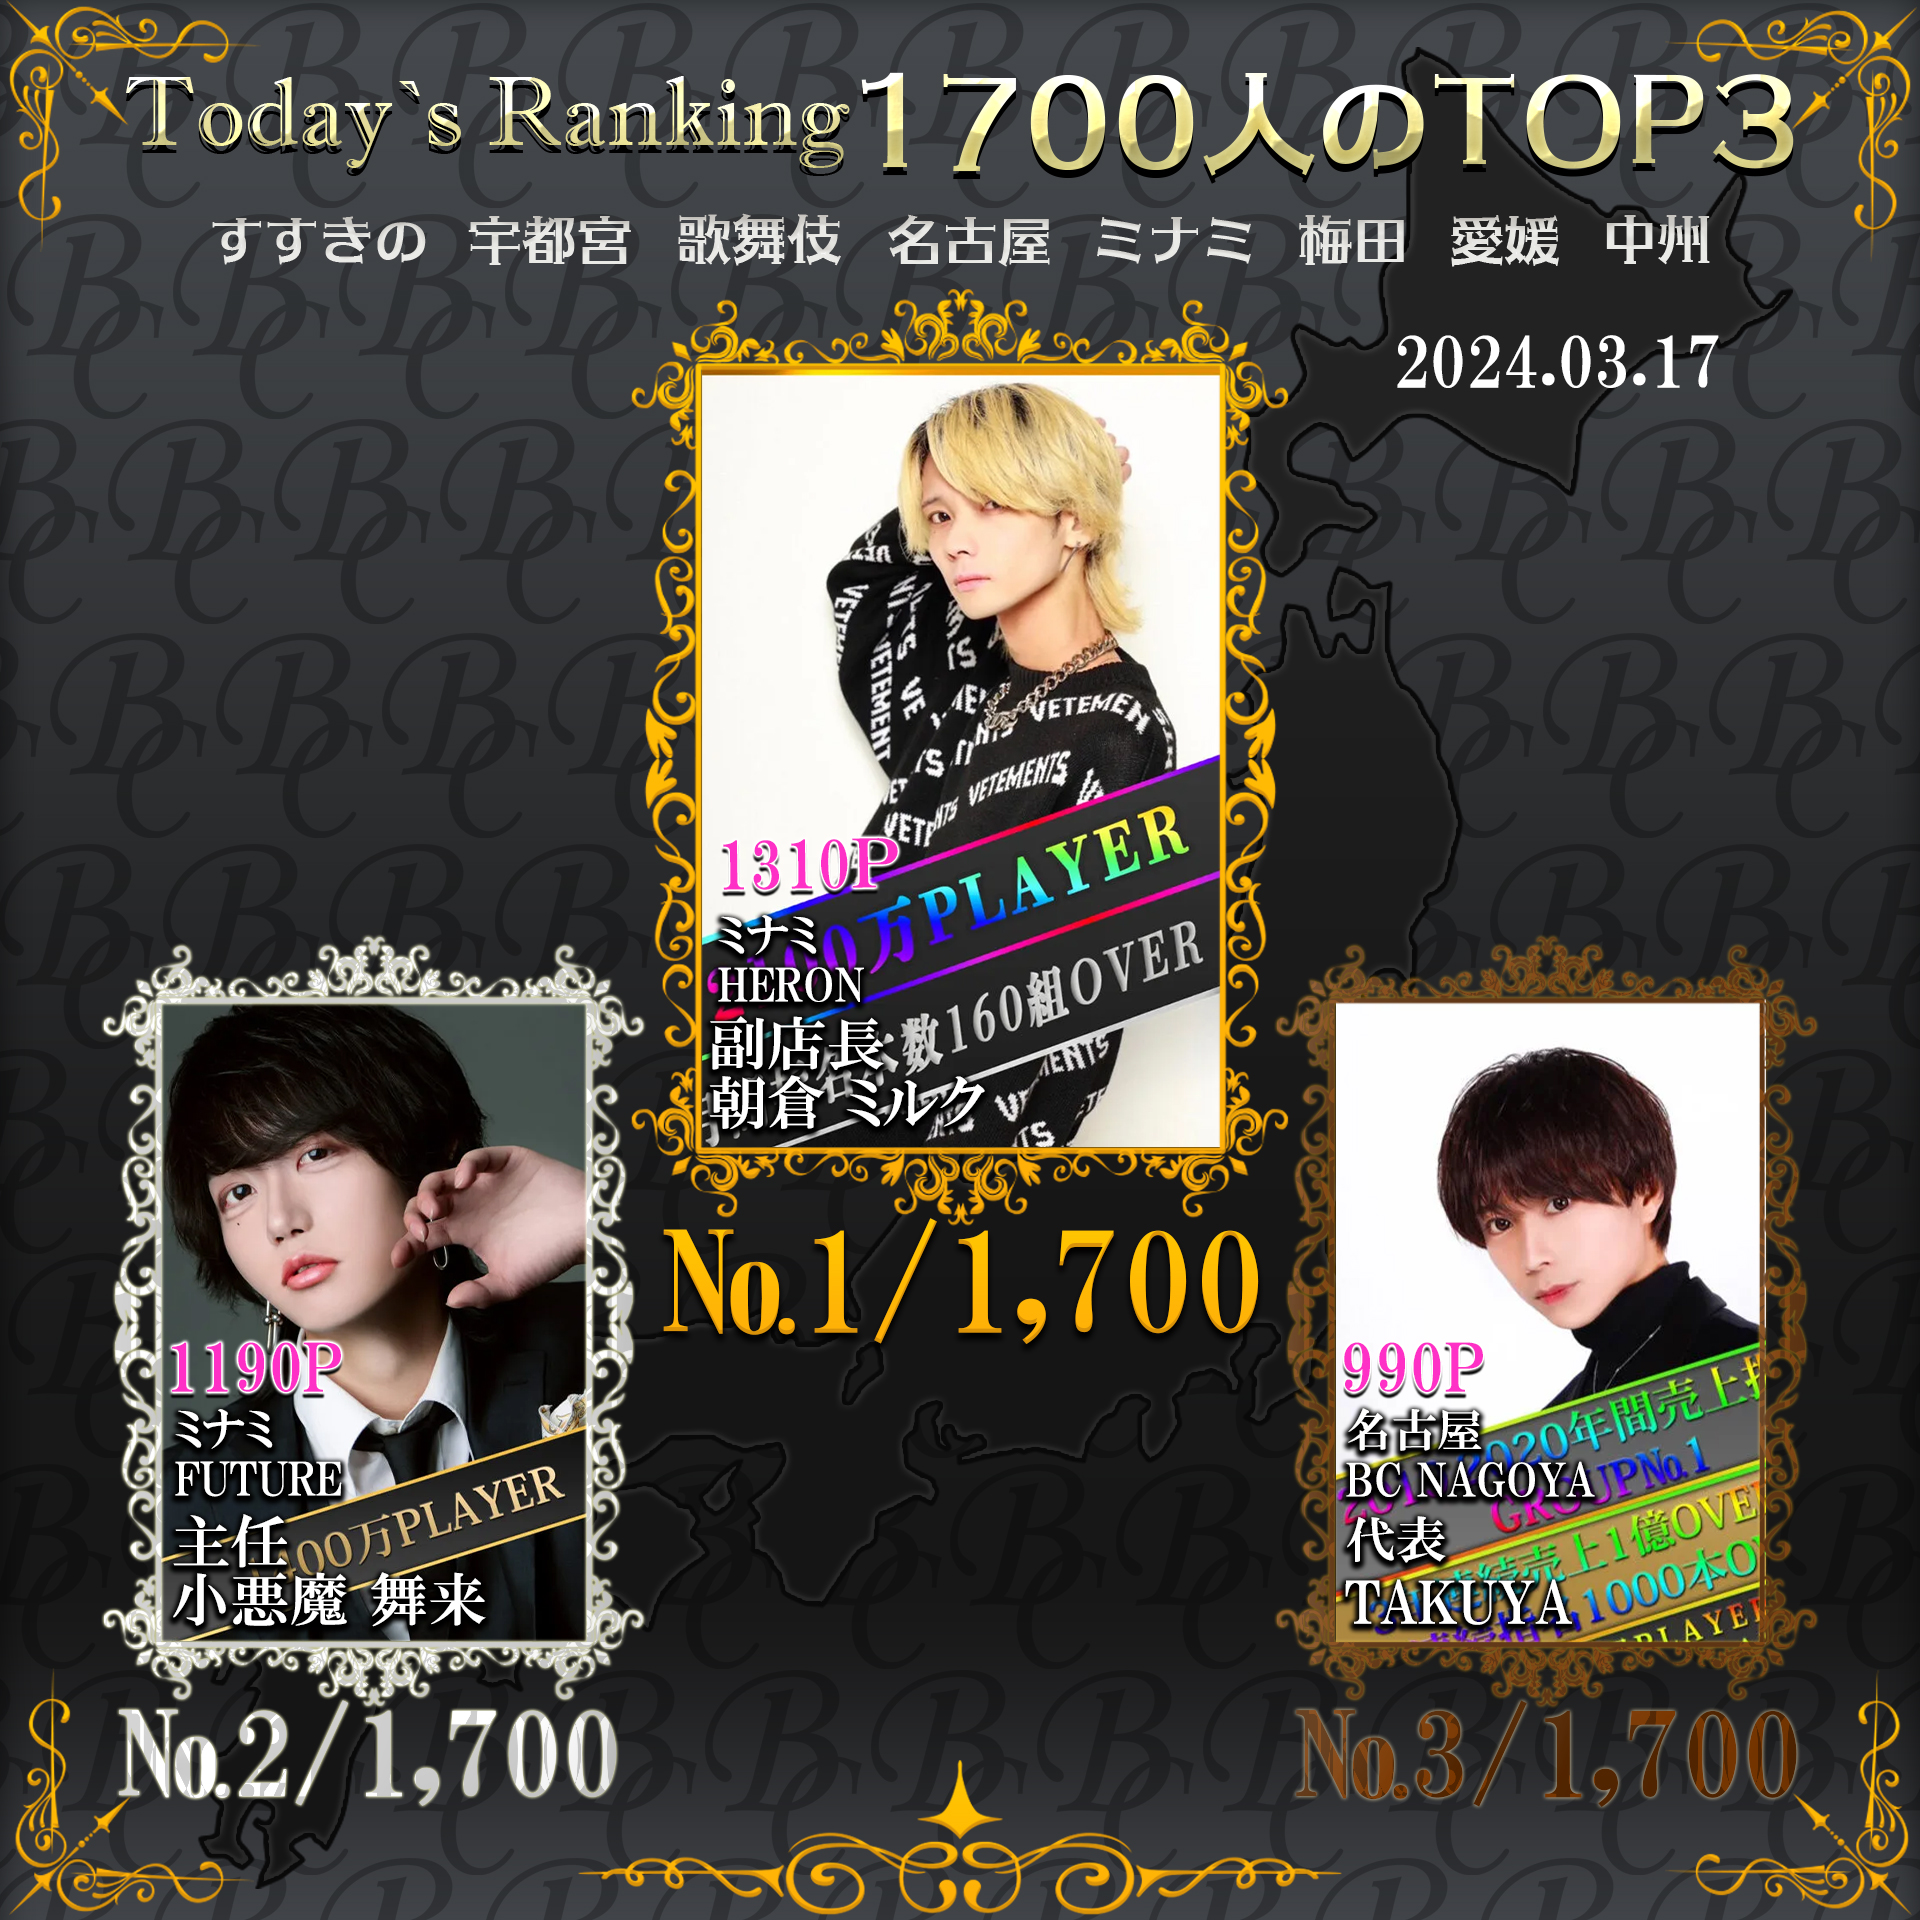 3/17 Today’s Ranking